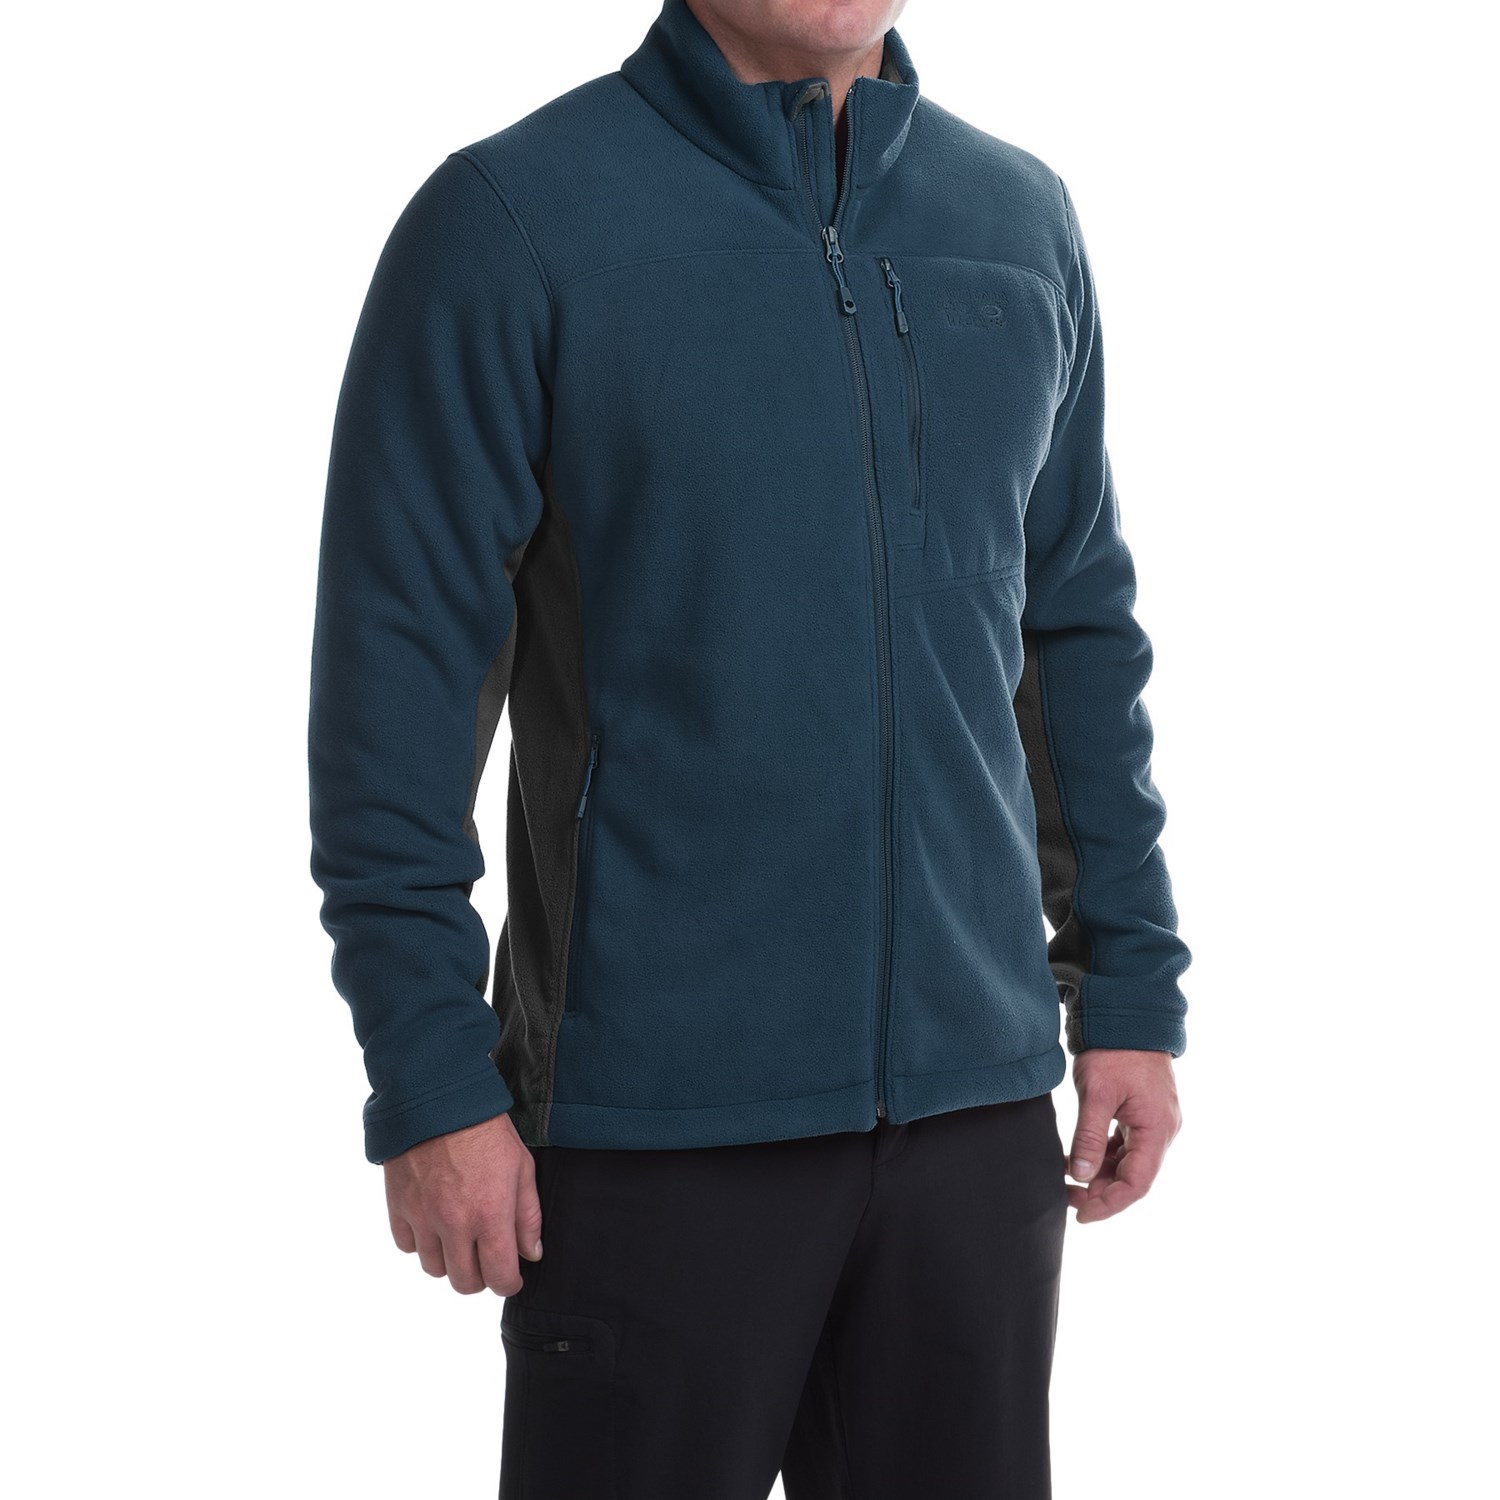 Customer Reviews of Mountain Hardwear Dual Fleece Jacket (For Men)